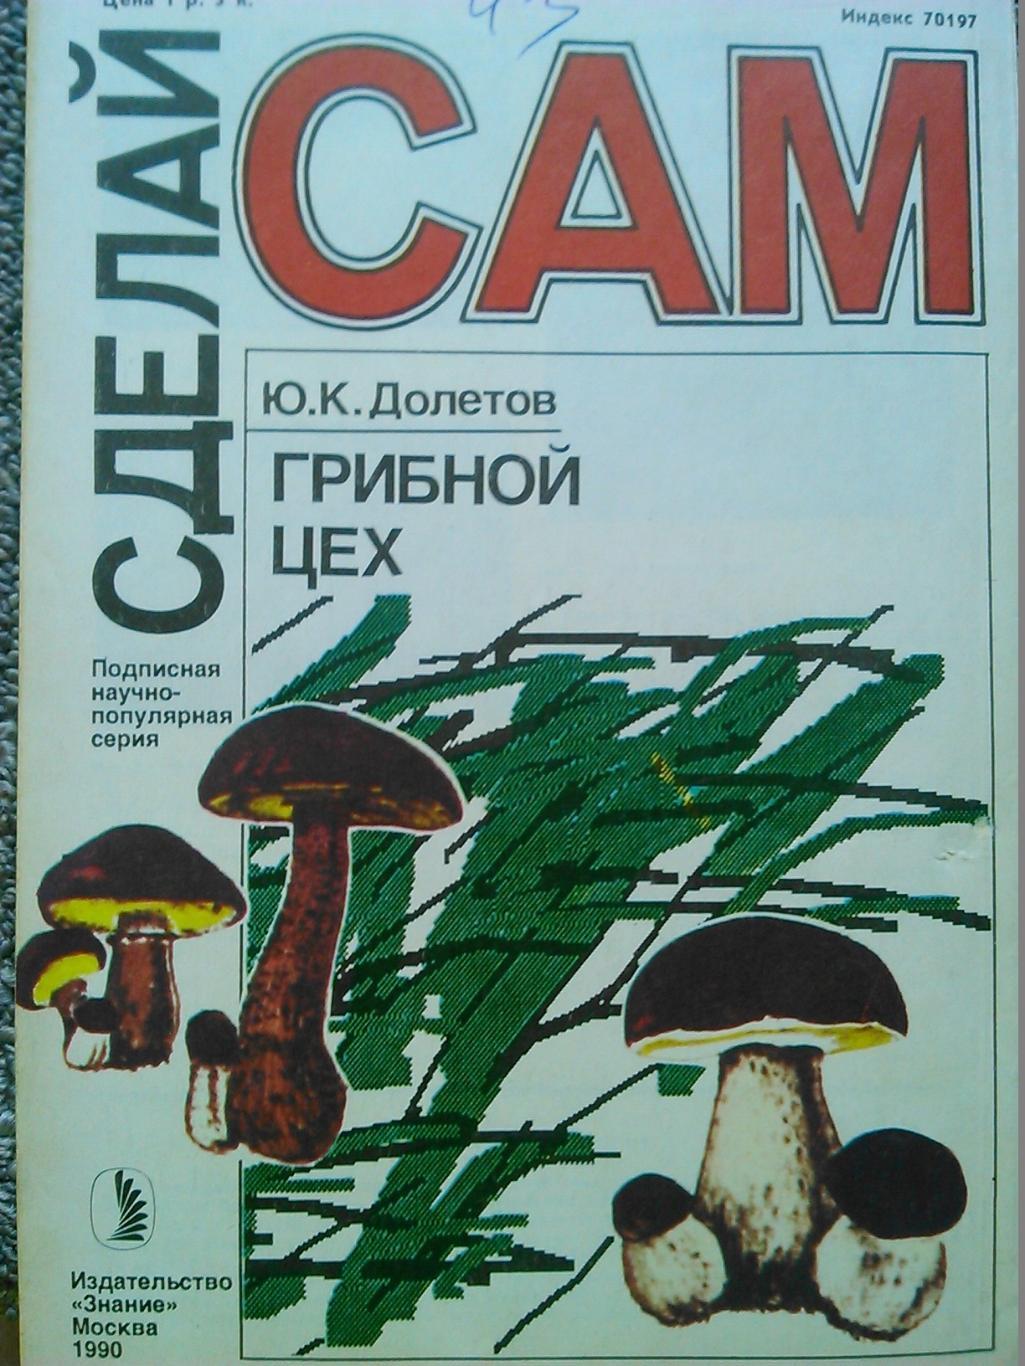 Журнал СДЕЛАЙ САМ №4.1990. Оптом скидки до 45%! 1